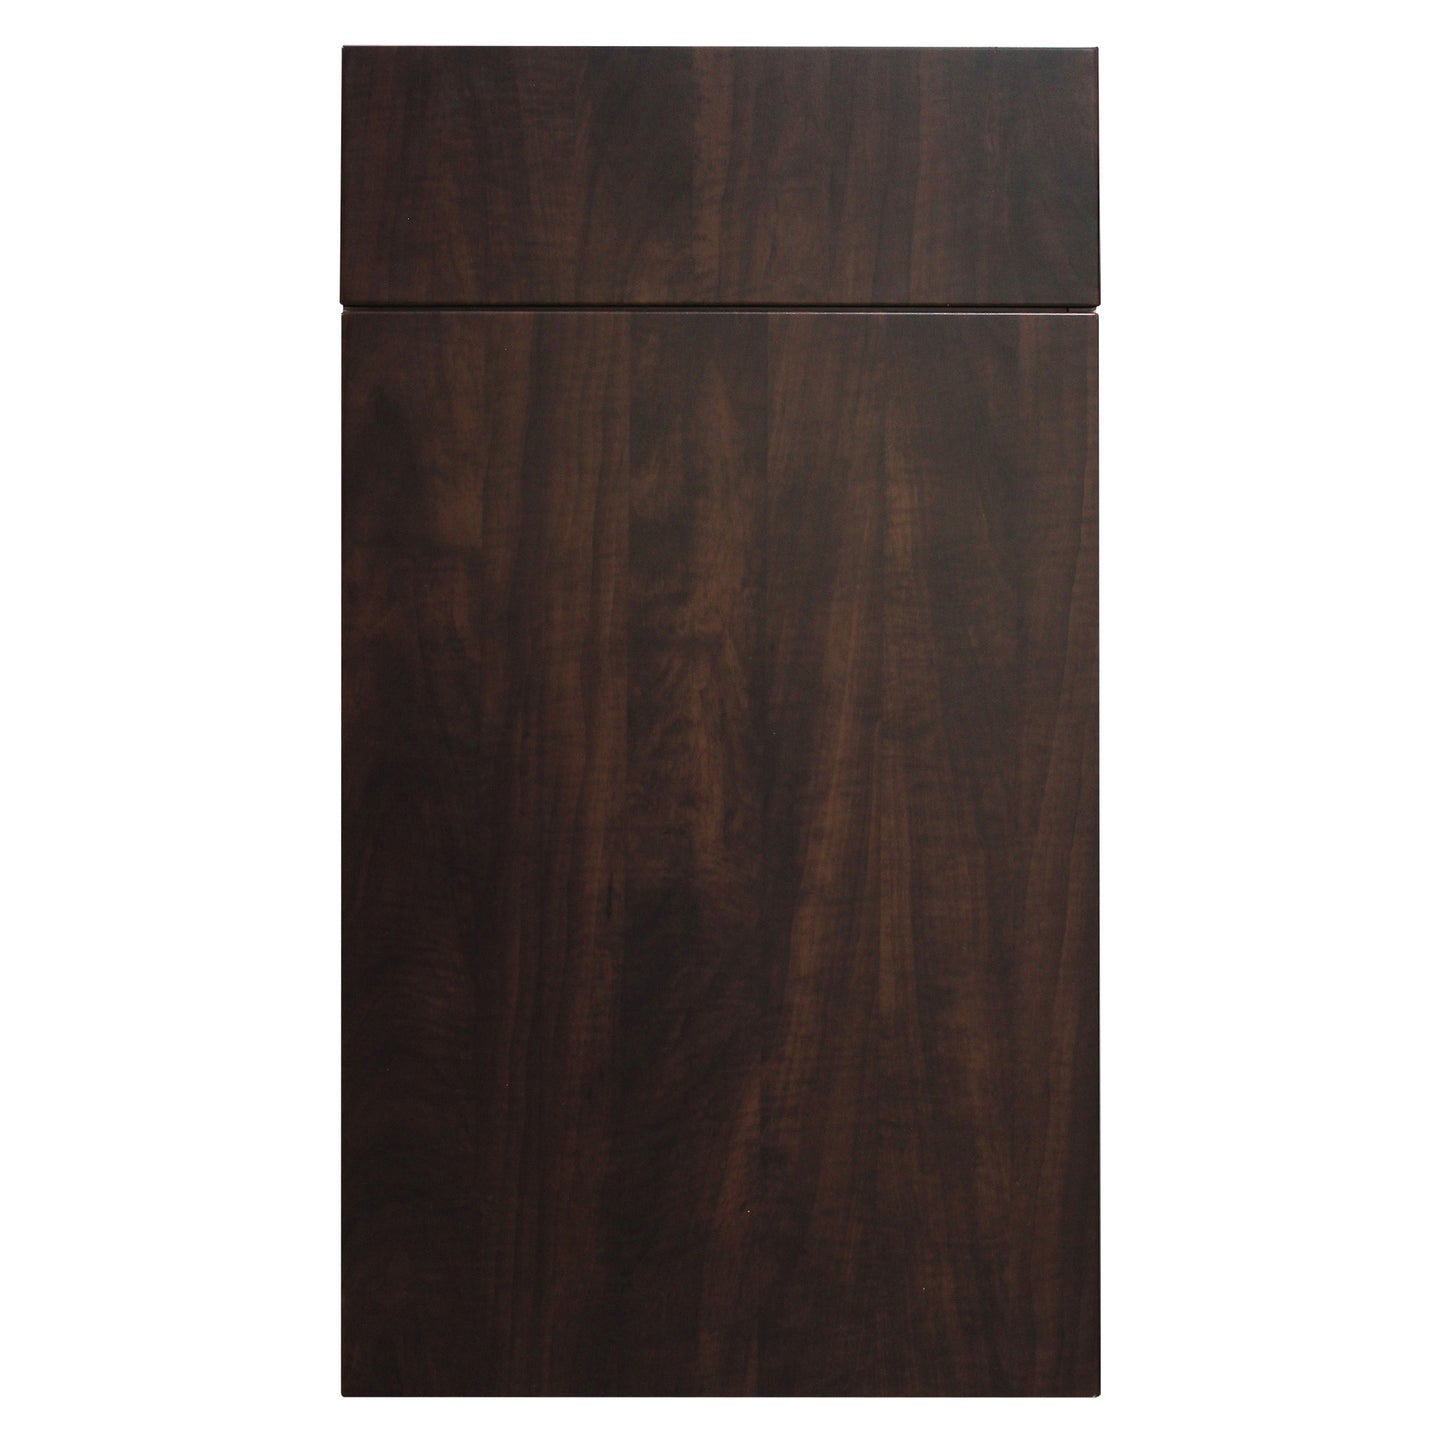 Dark Chocolate Wood Grain Kitchen Door - Quality Kitchens For Less